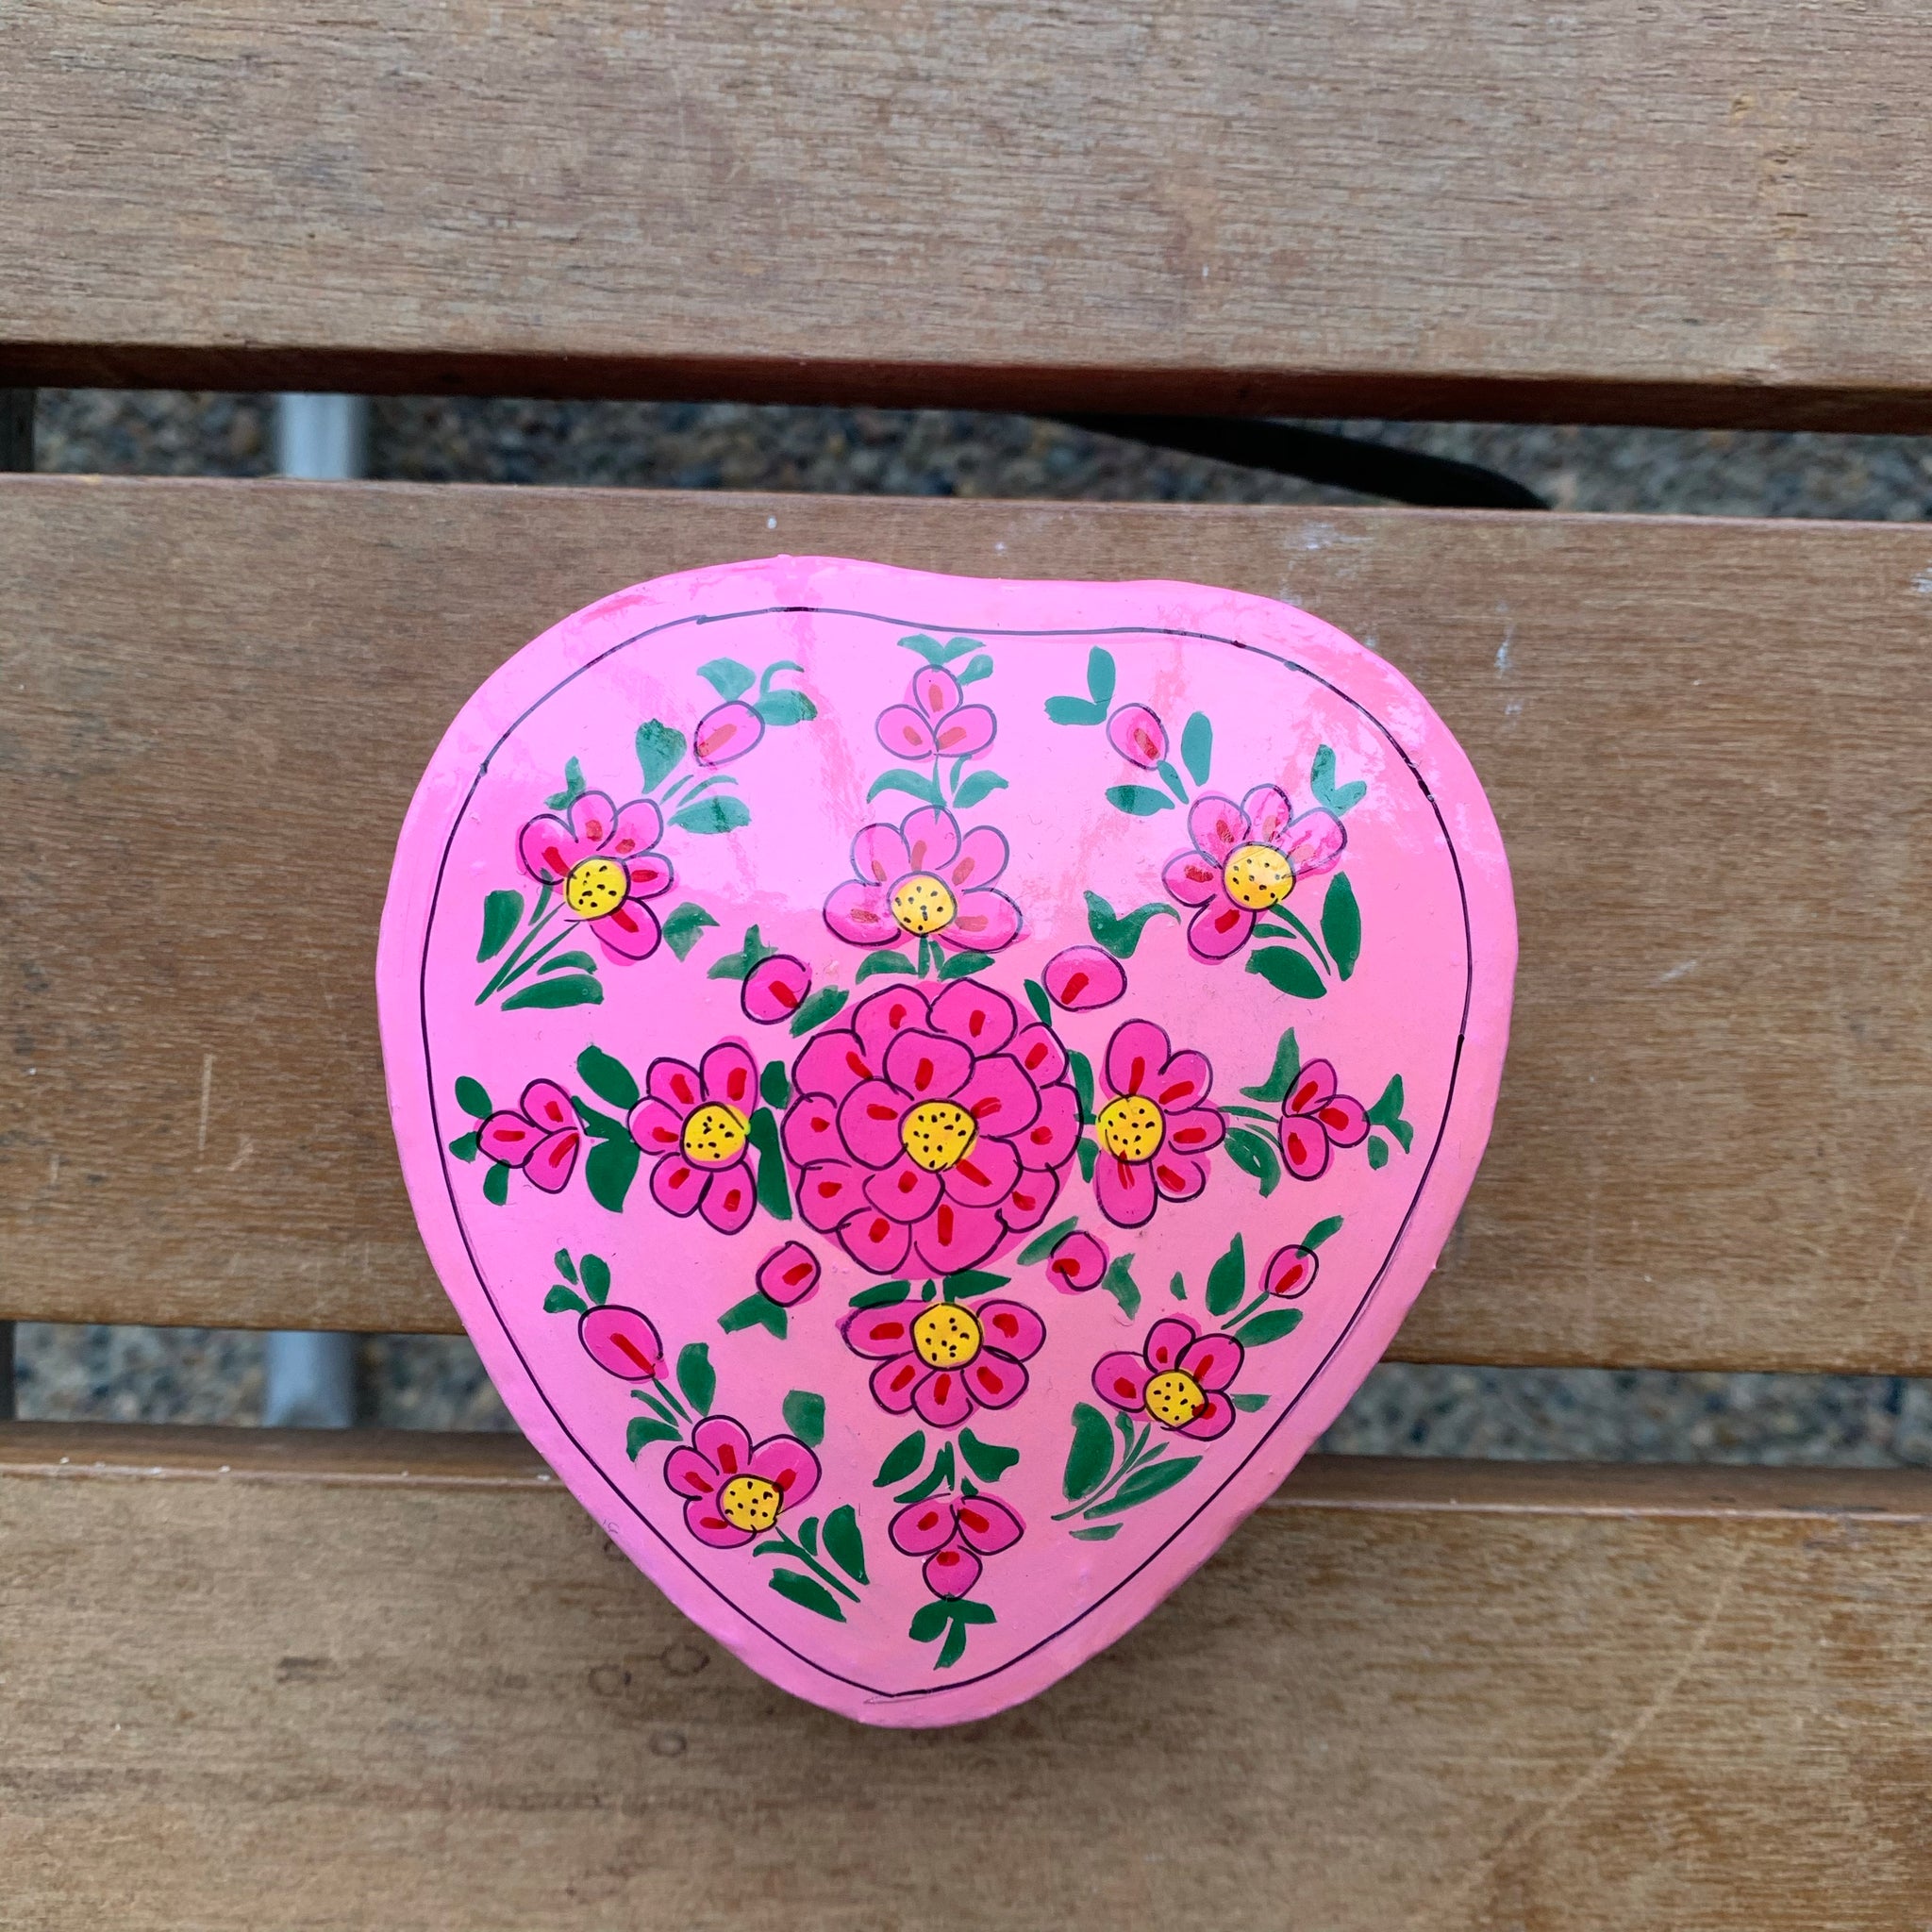 Fair Trade Ethical Papier-Mache Painted Pink Heart Box